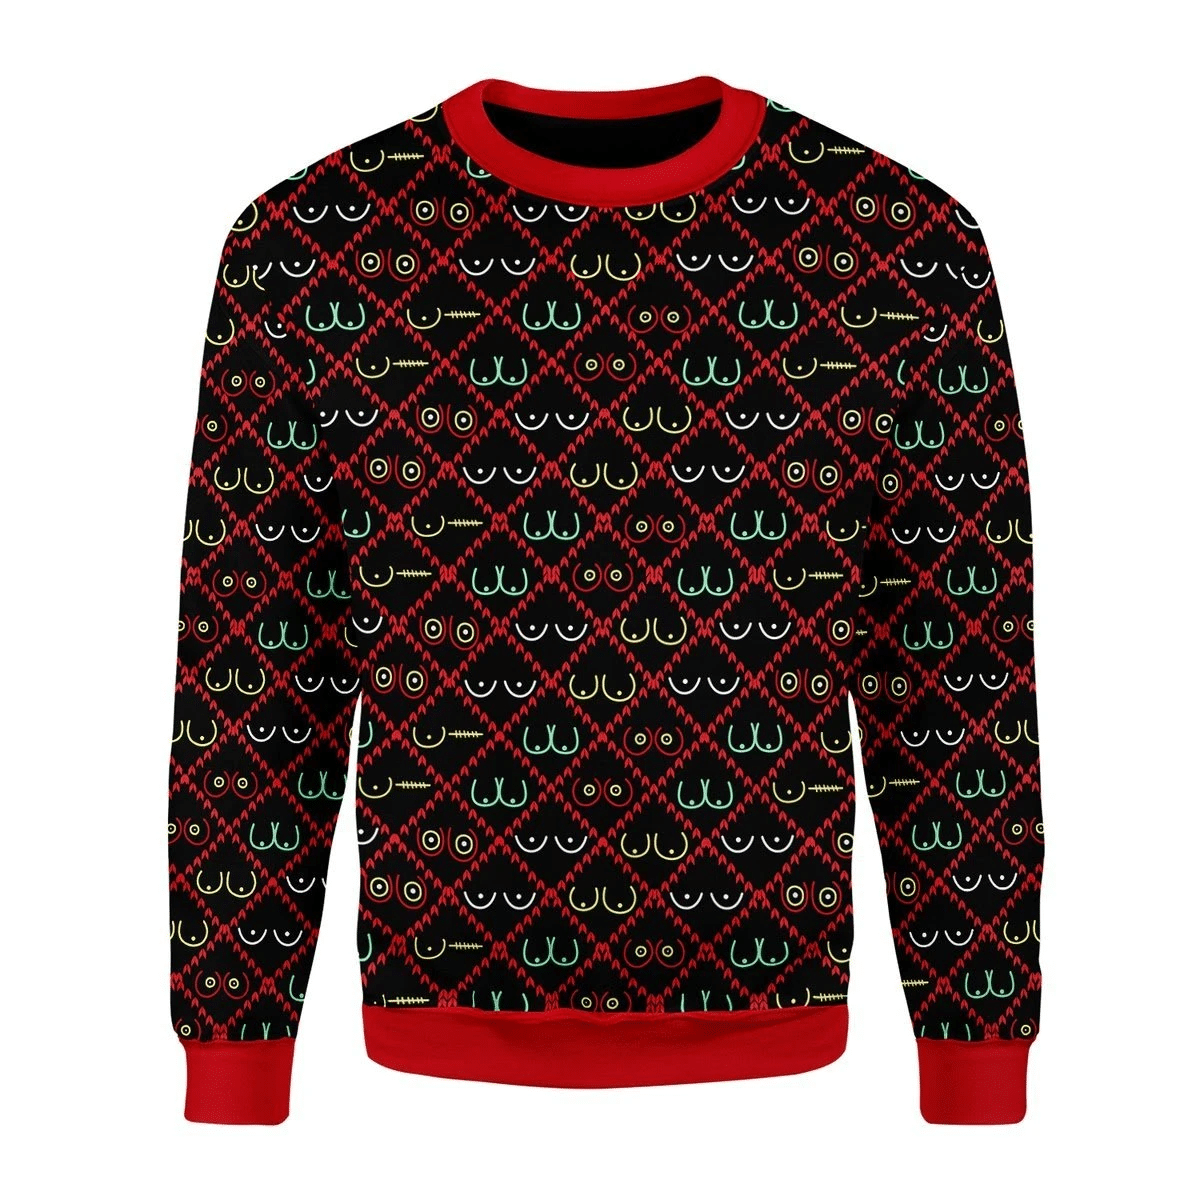 Boobs Ugly Christmas Sweater 295 - StirTshirt